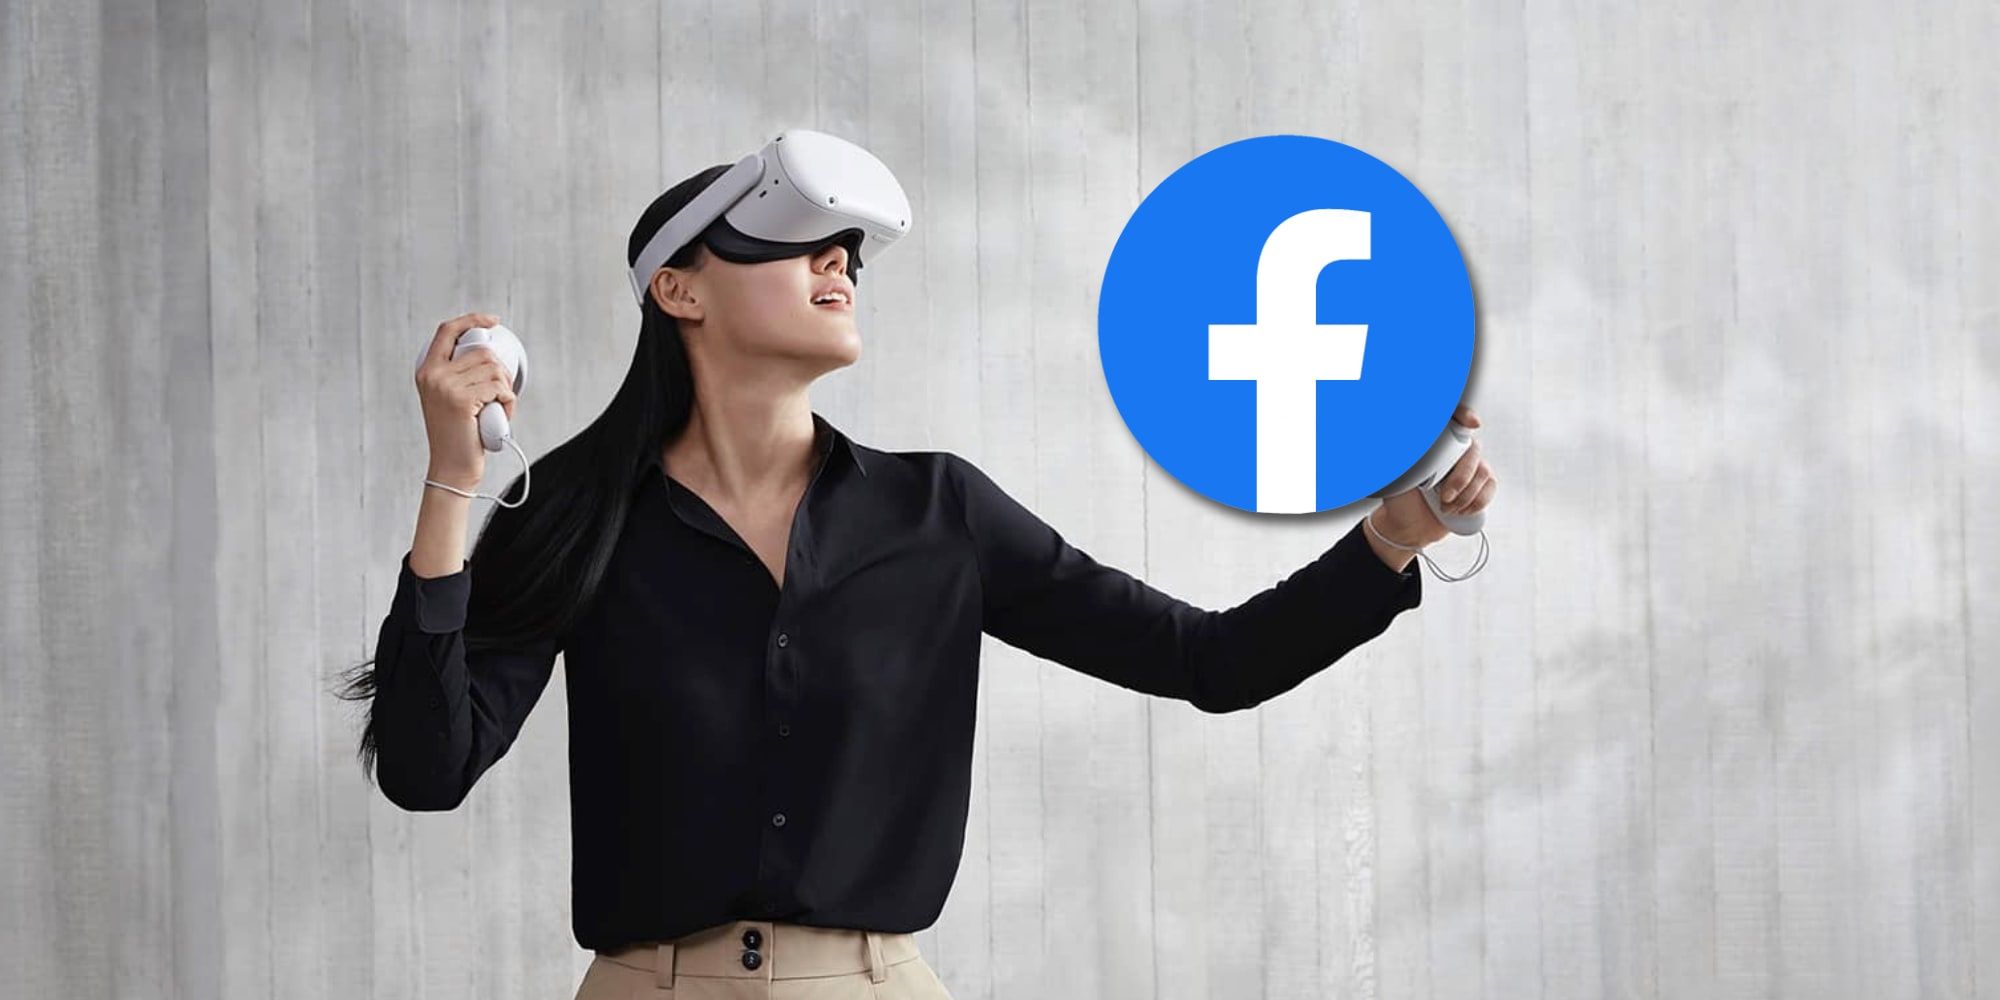 Facebook Logo Over Player Wearing Oculus Quest 2 VR Headset